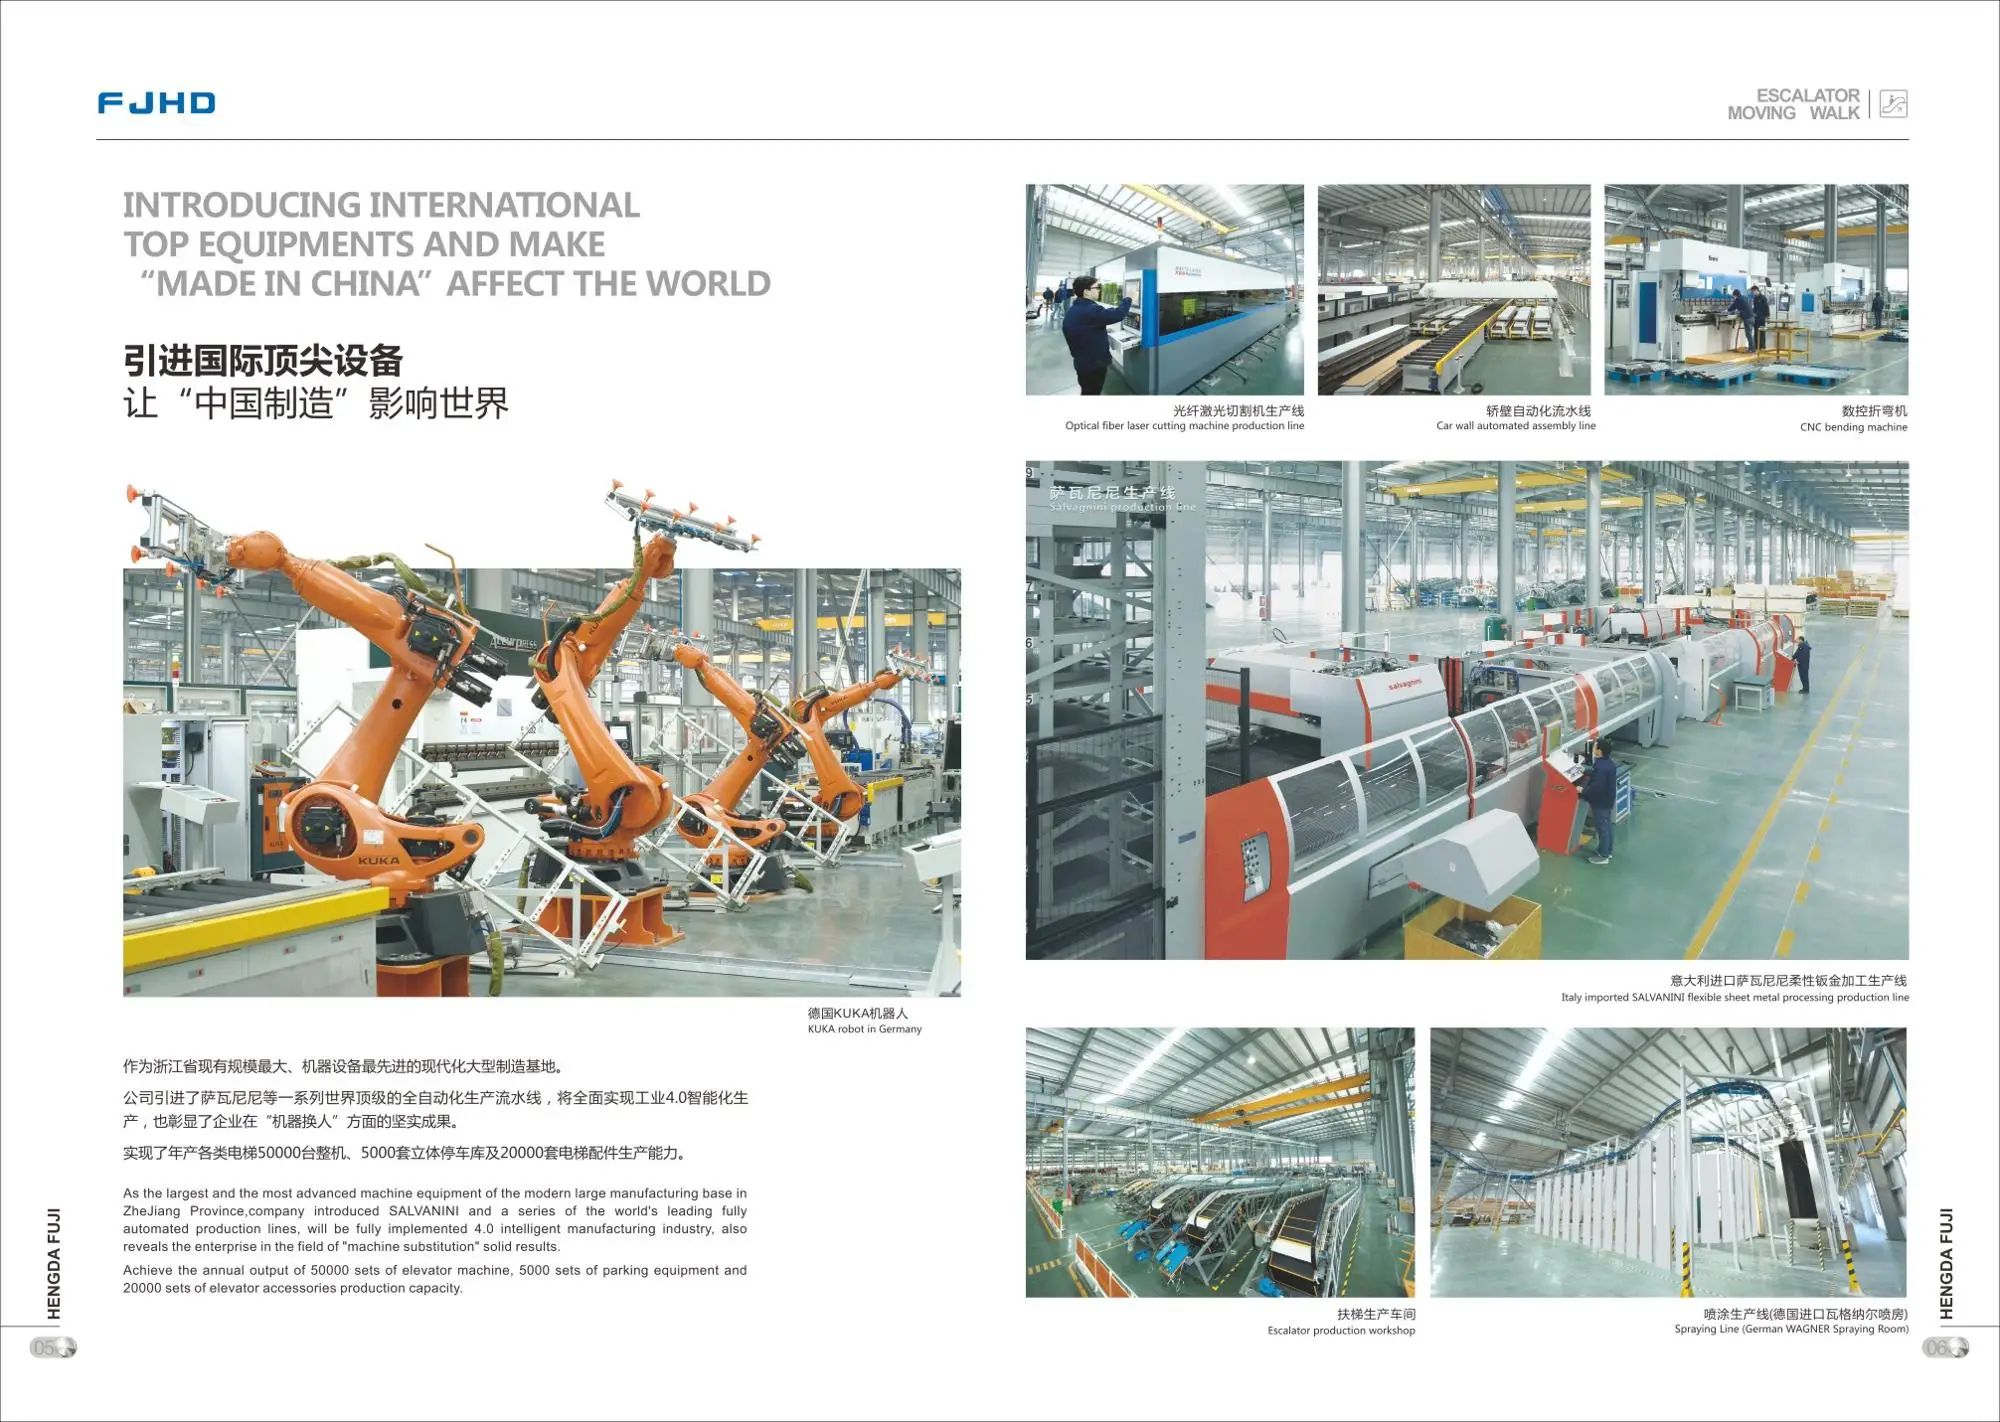 Fuji Moving Walk Manufacturer in China